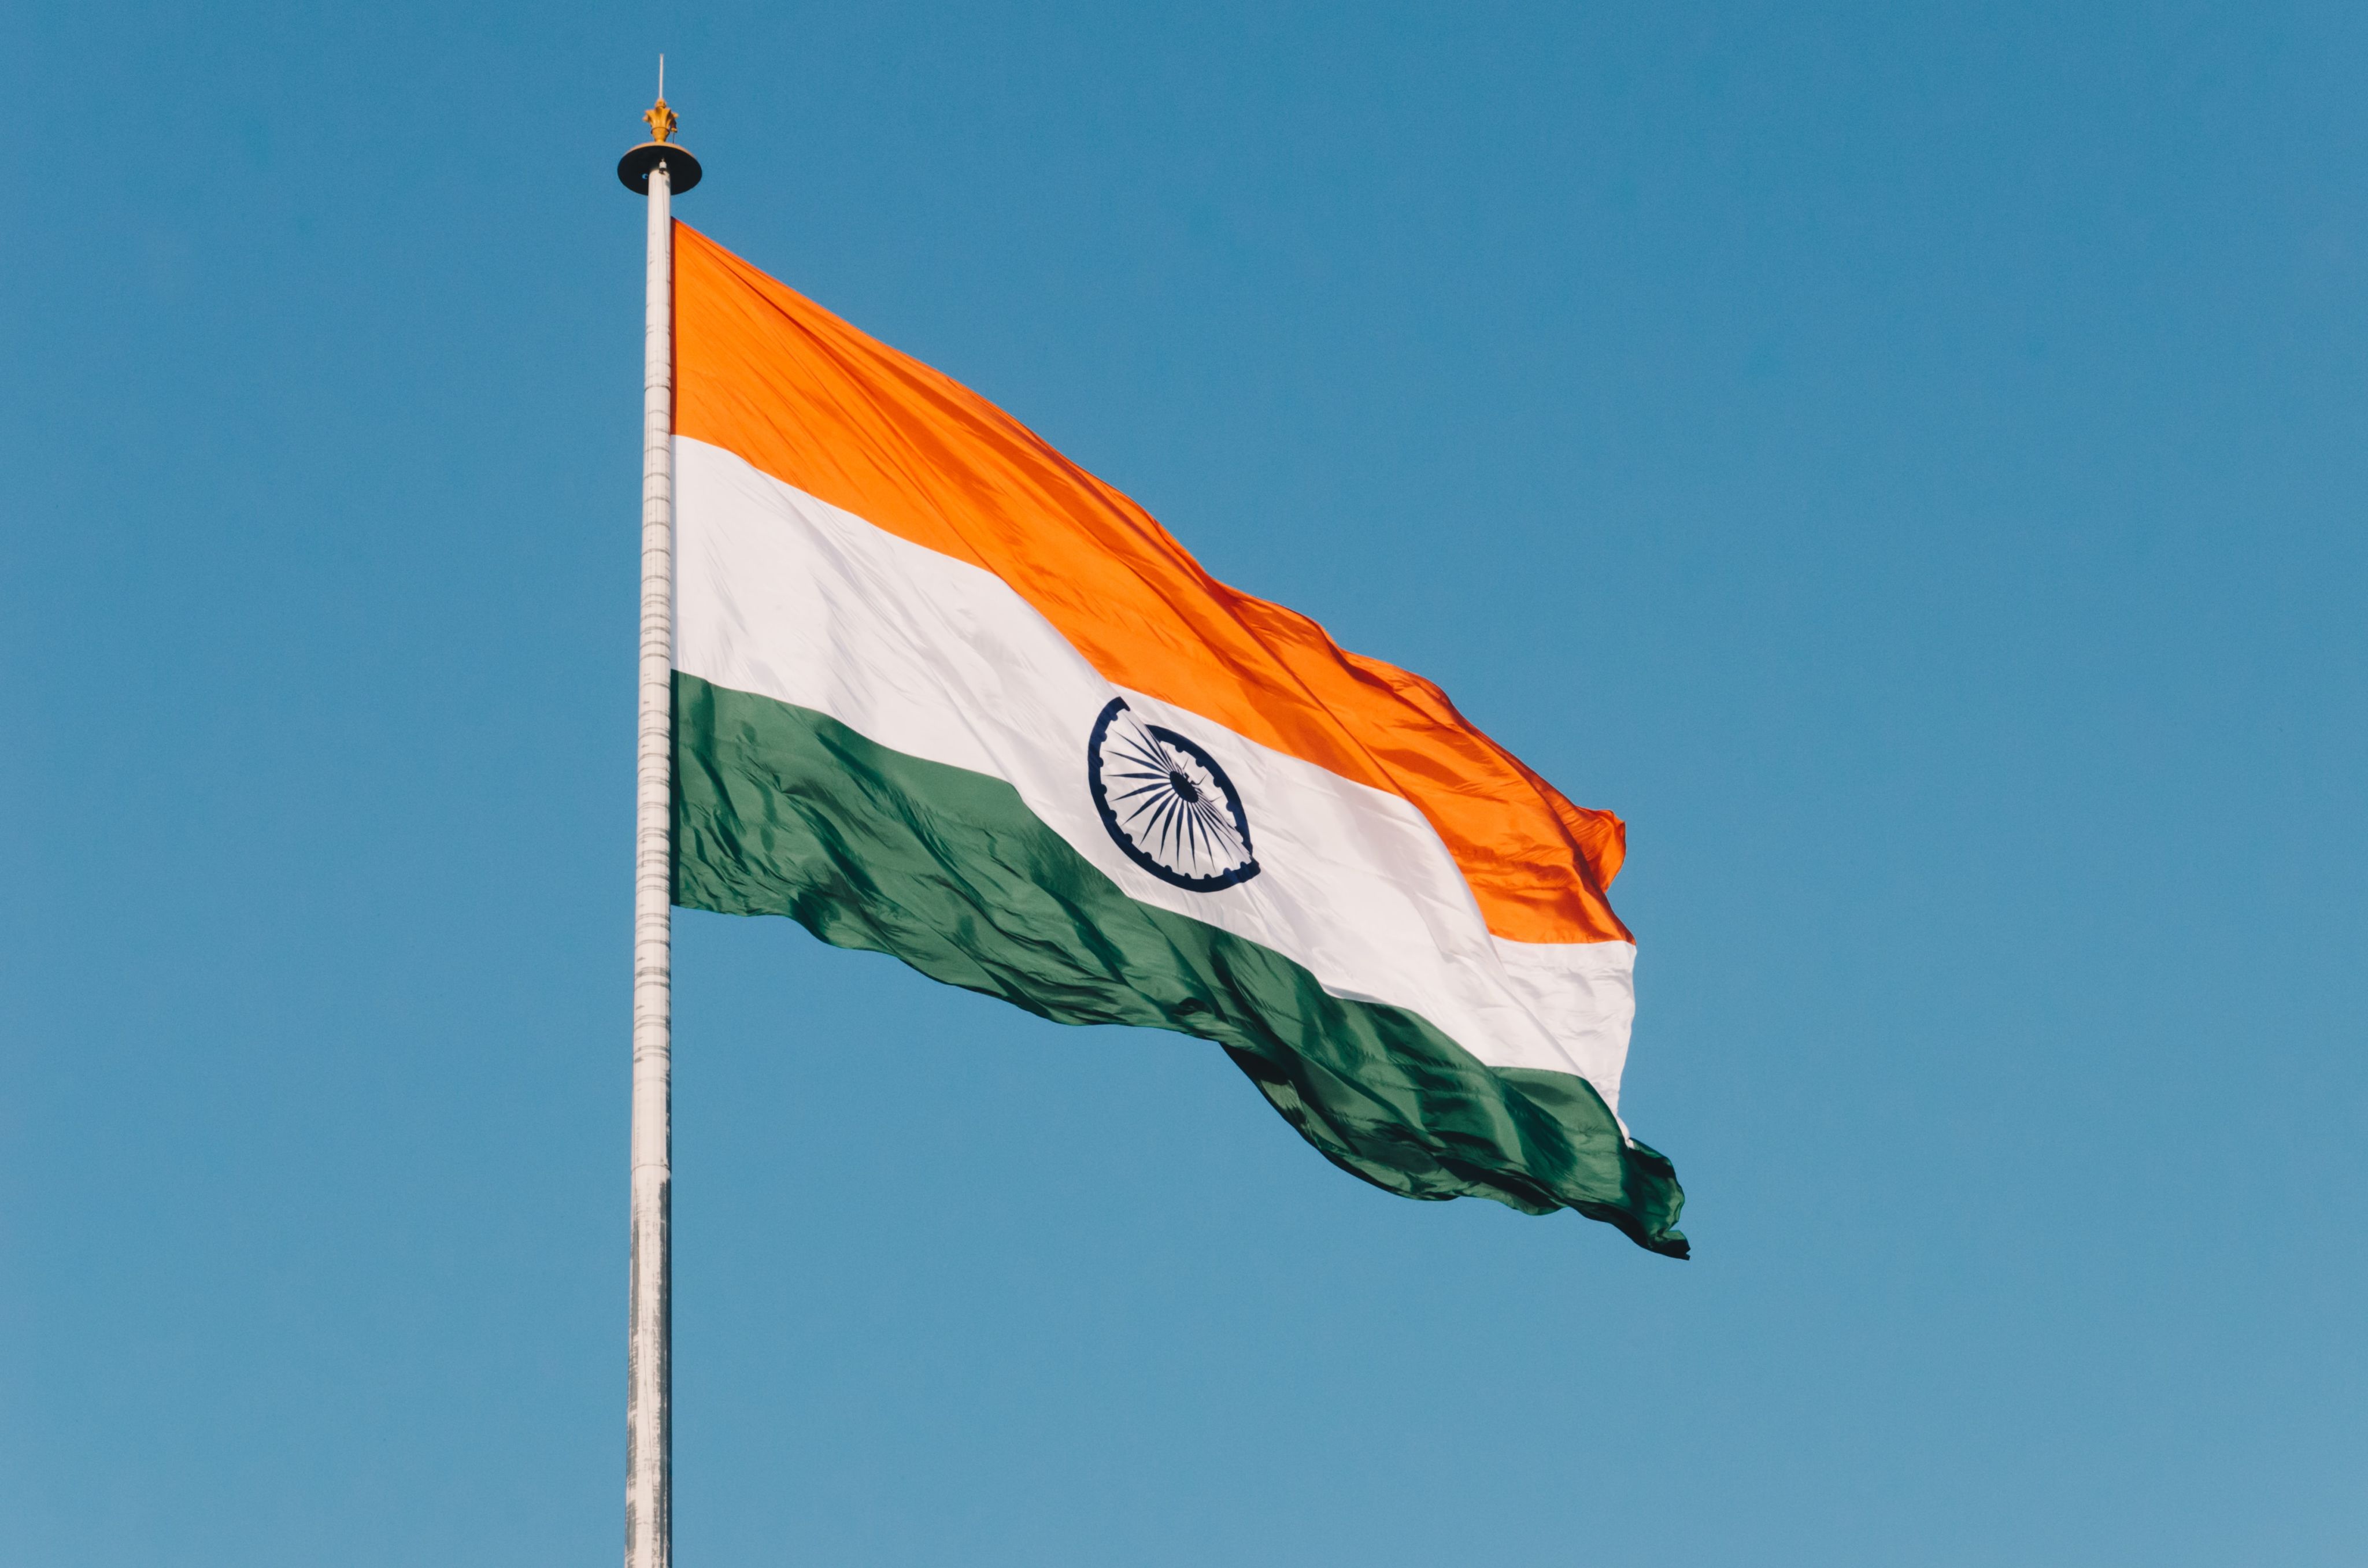 flag of India hanging on pole